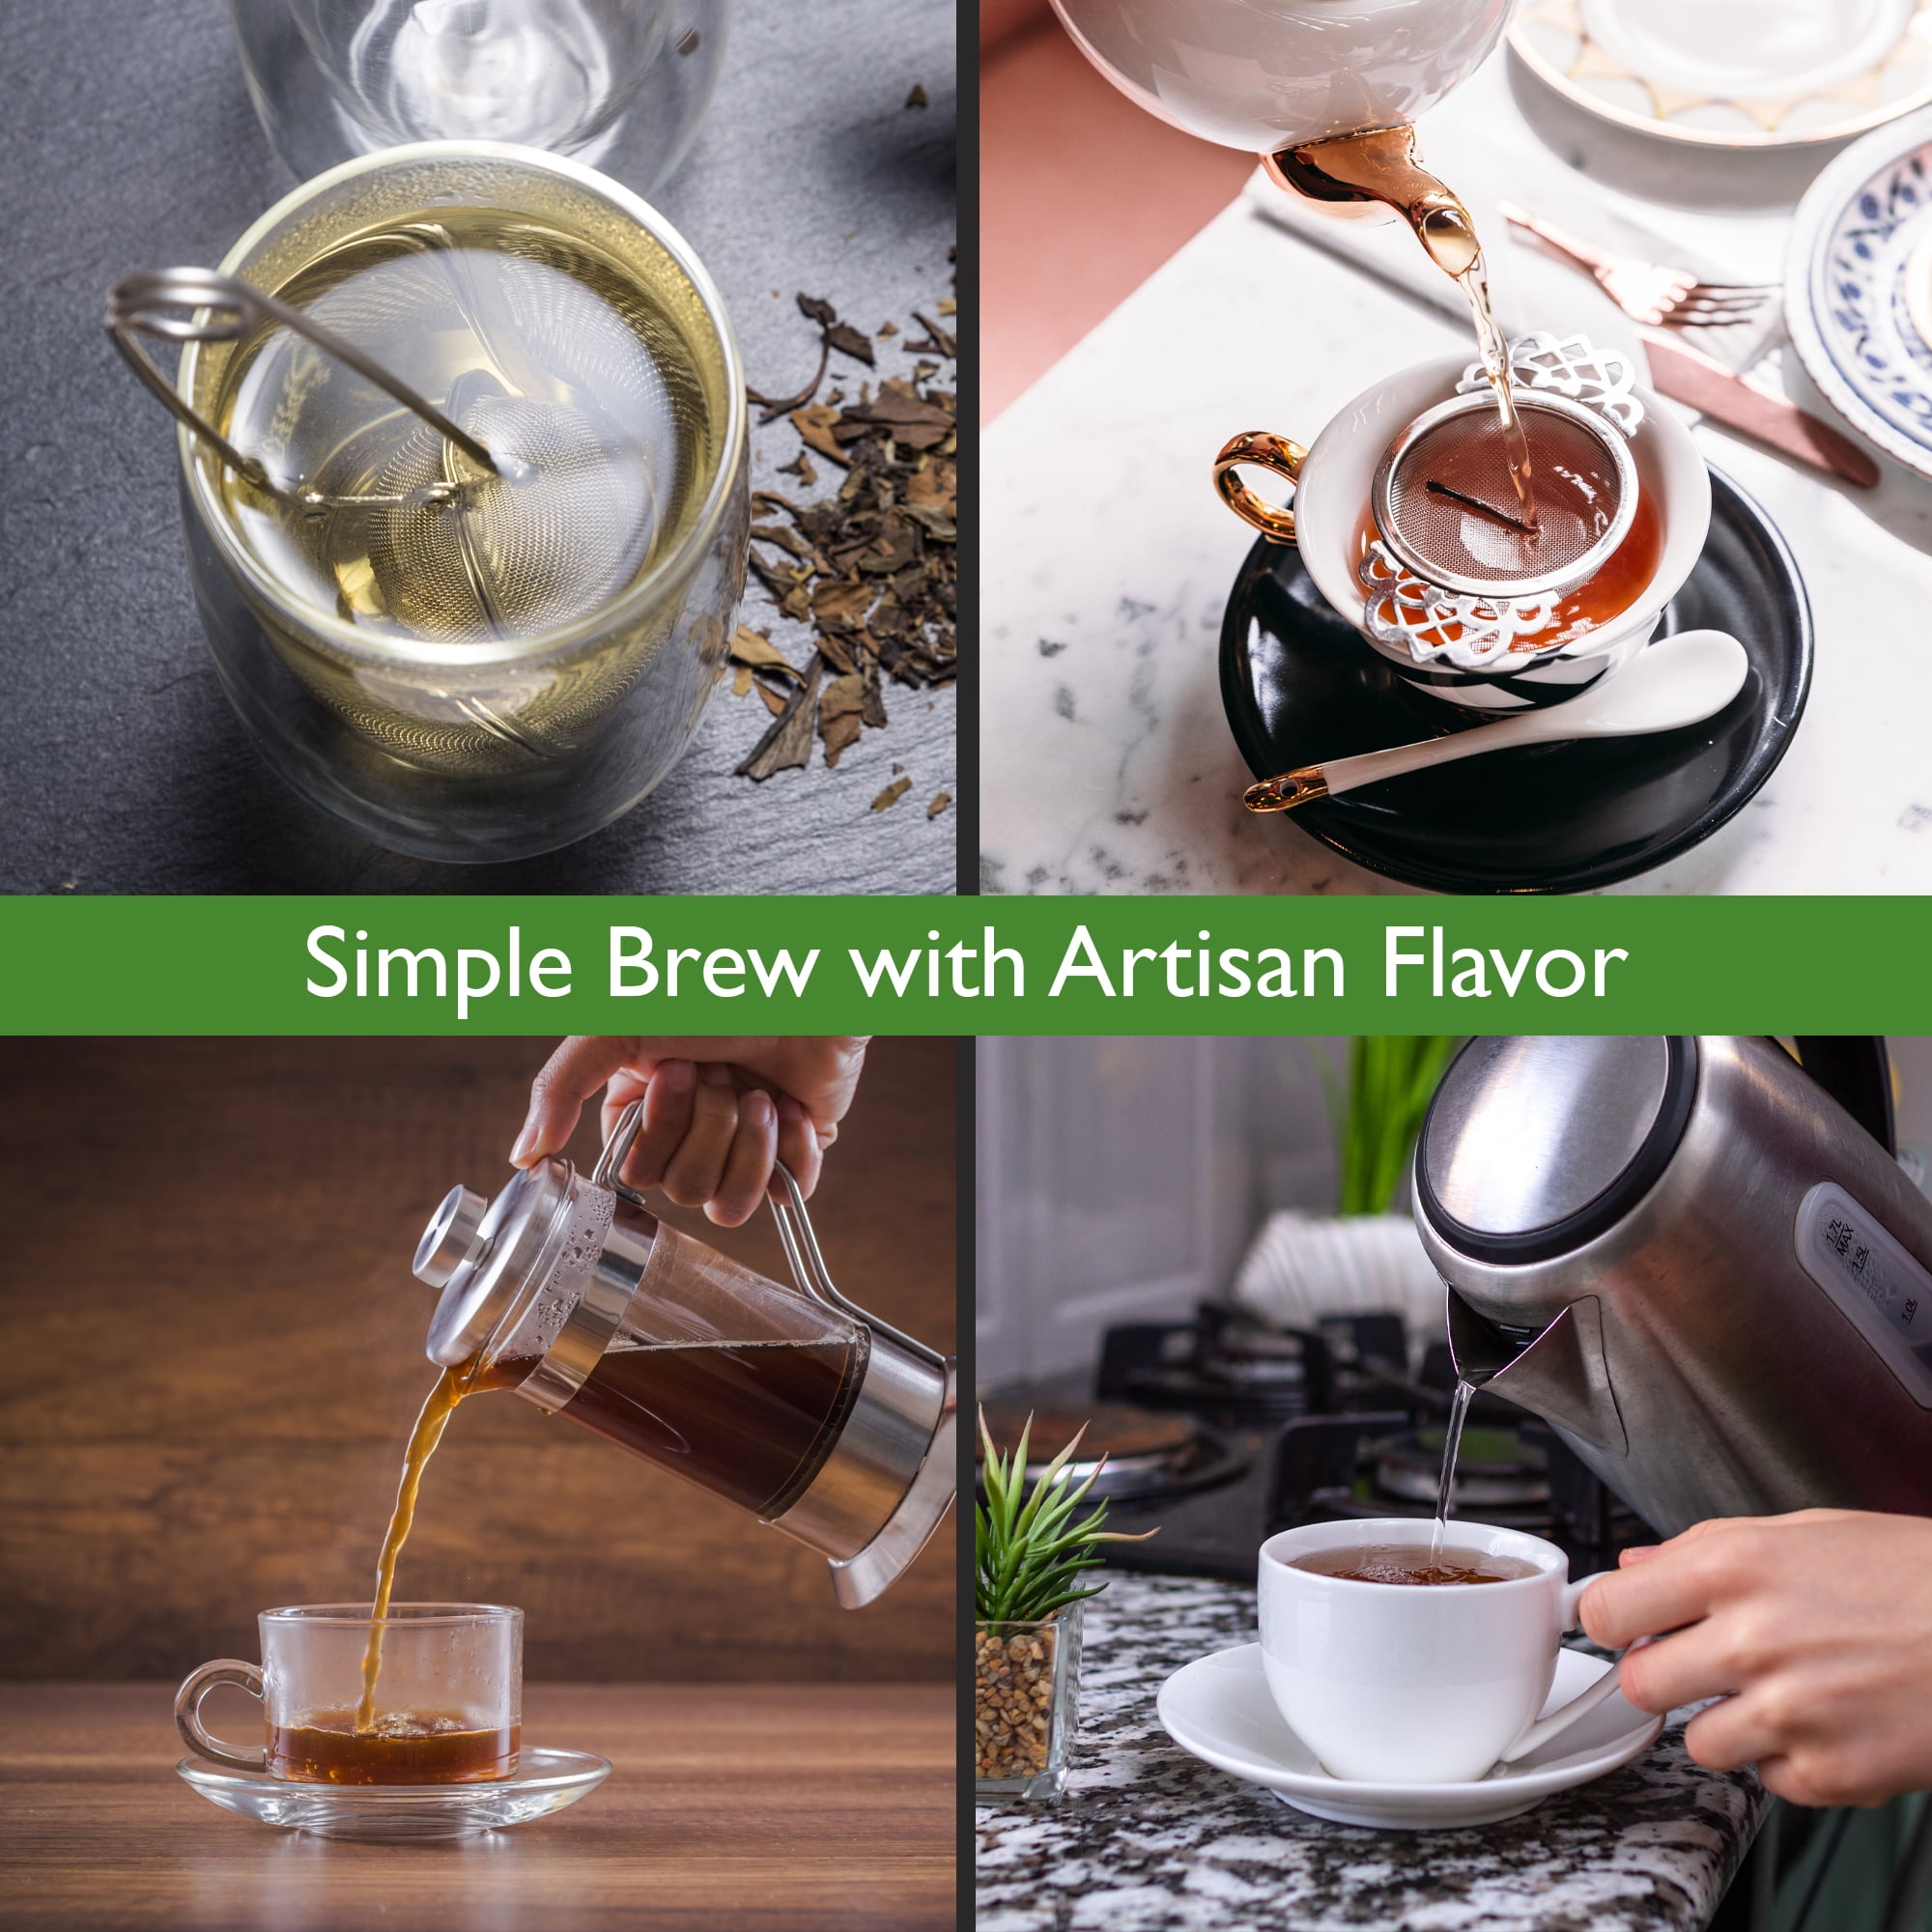 Loose Tea Gift for Beginners - Loose Tea Starter Set | Tea Spot